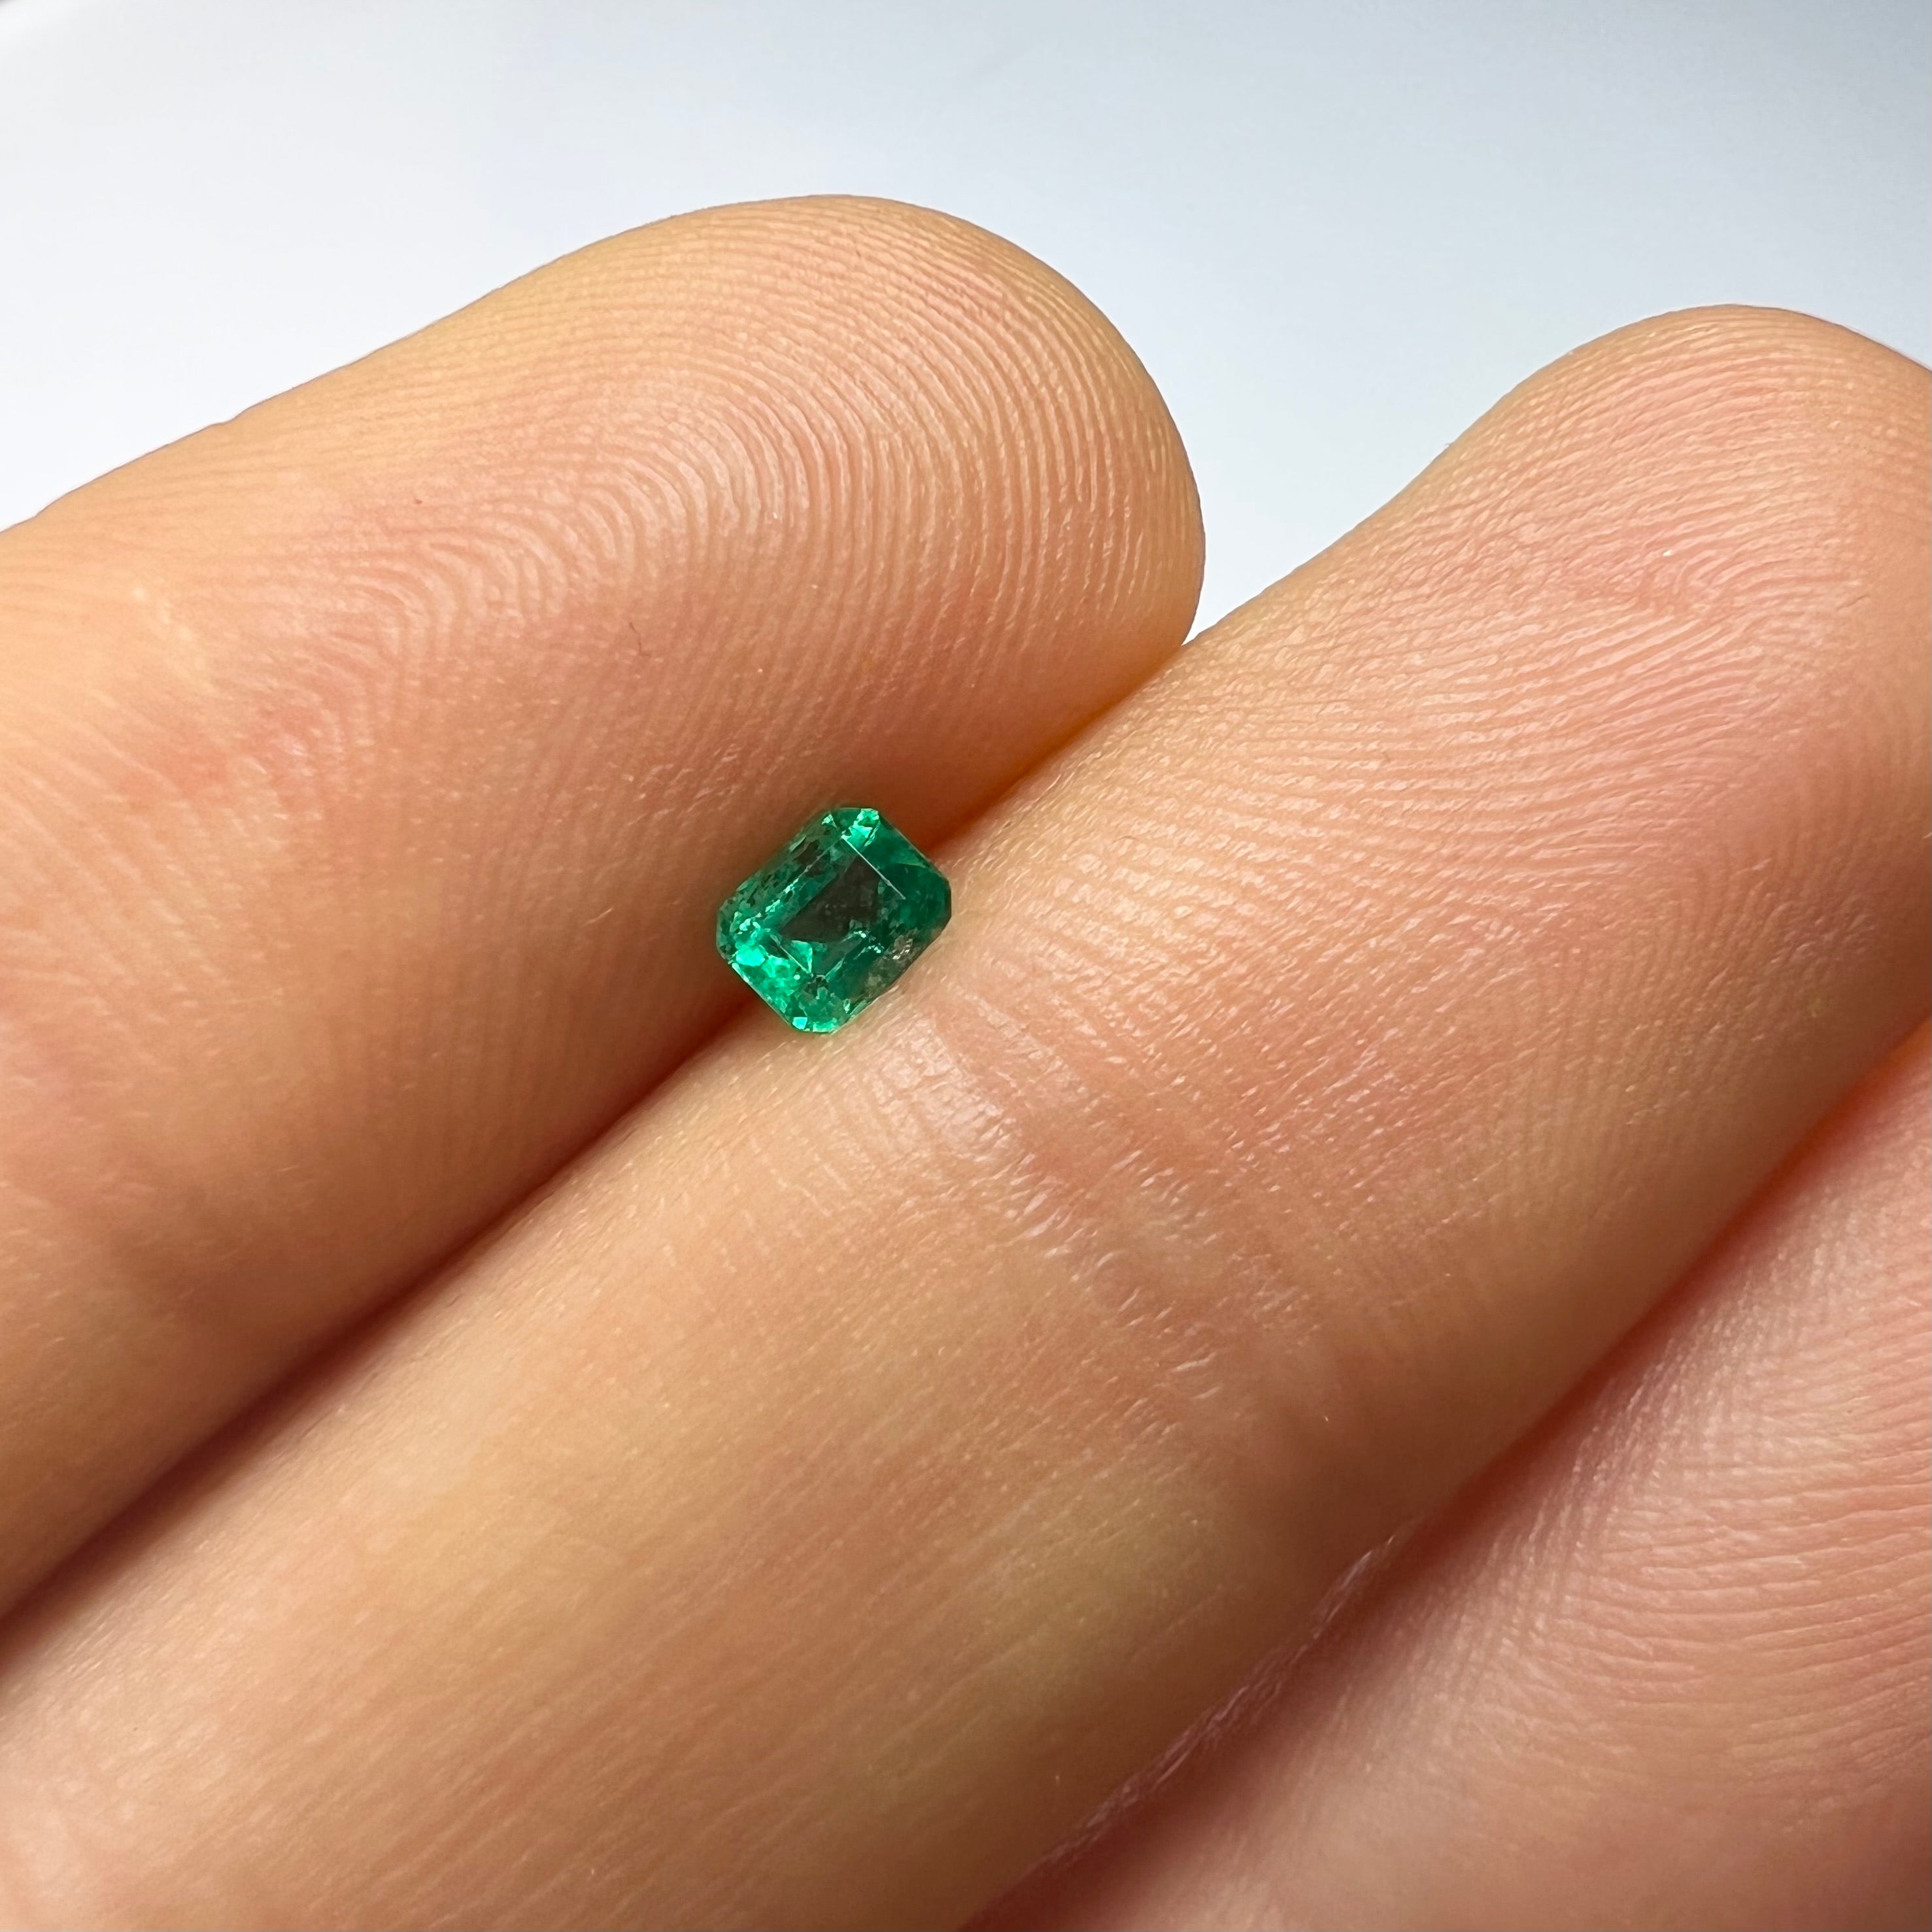 .22CT Loose Colombian Emerald, Emerald Cut 3.94x3.27x2.45mm Earth mined Gemstone